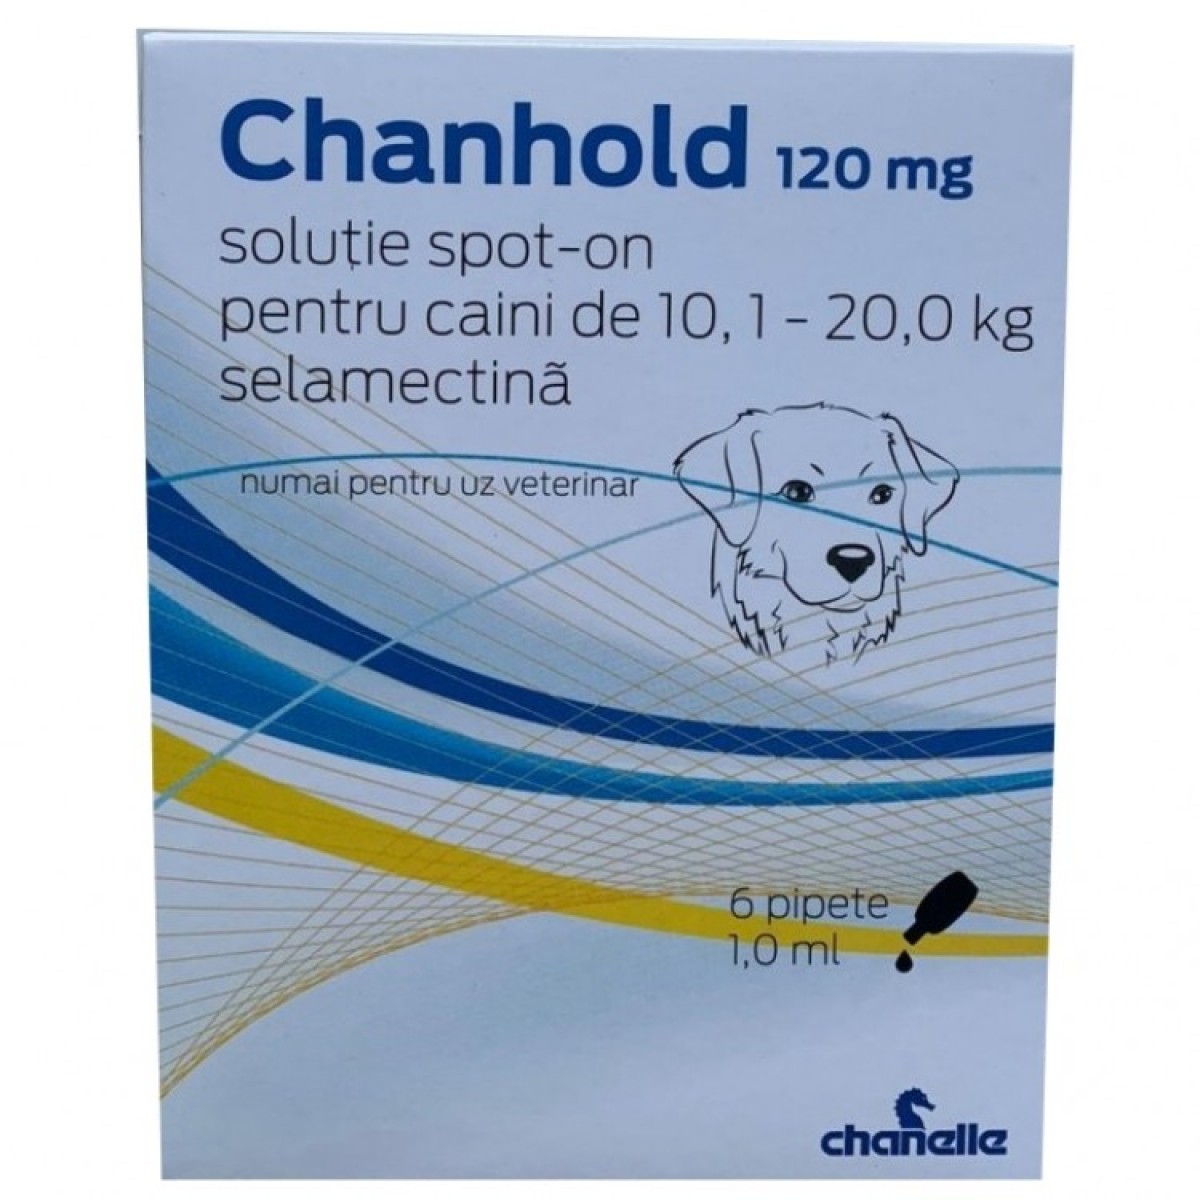 Chanhold 120 mg pentru câini între 10 - 20 kg 6 pipete antiparazitare, Antiparazitare externe, Antiparazitare, Câini 